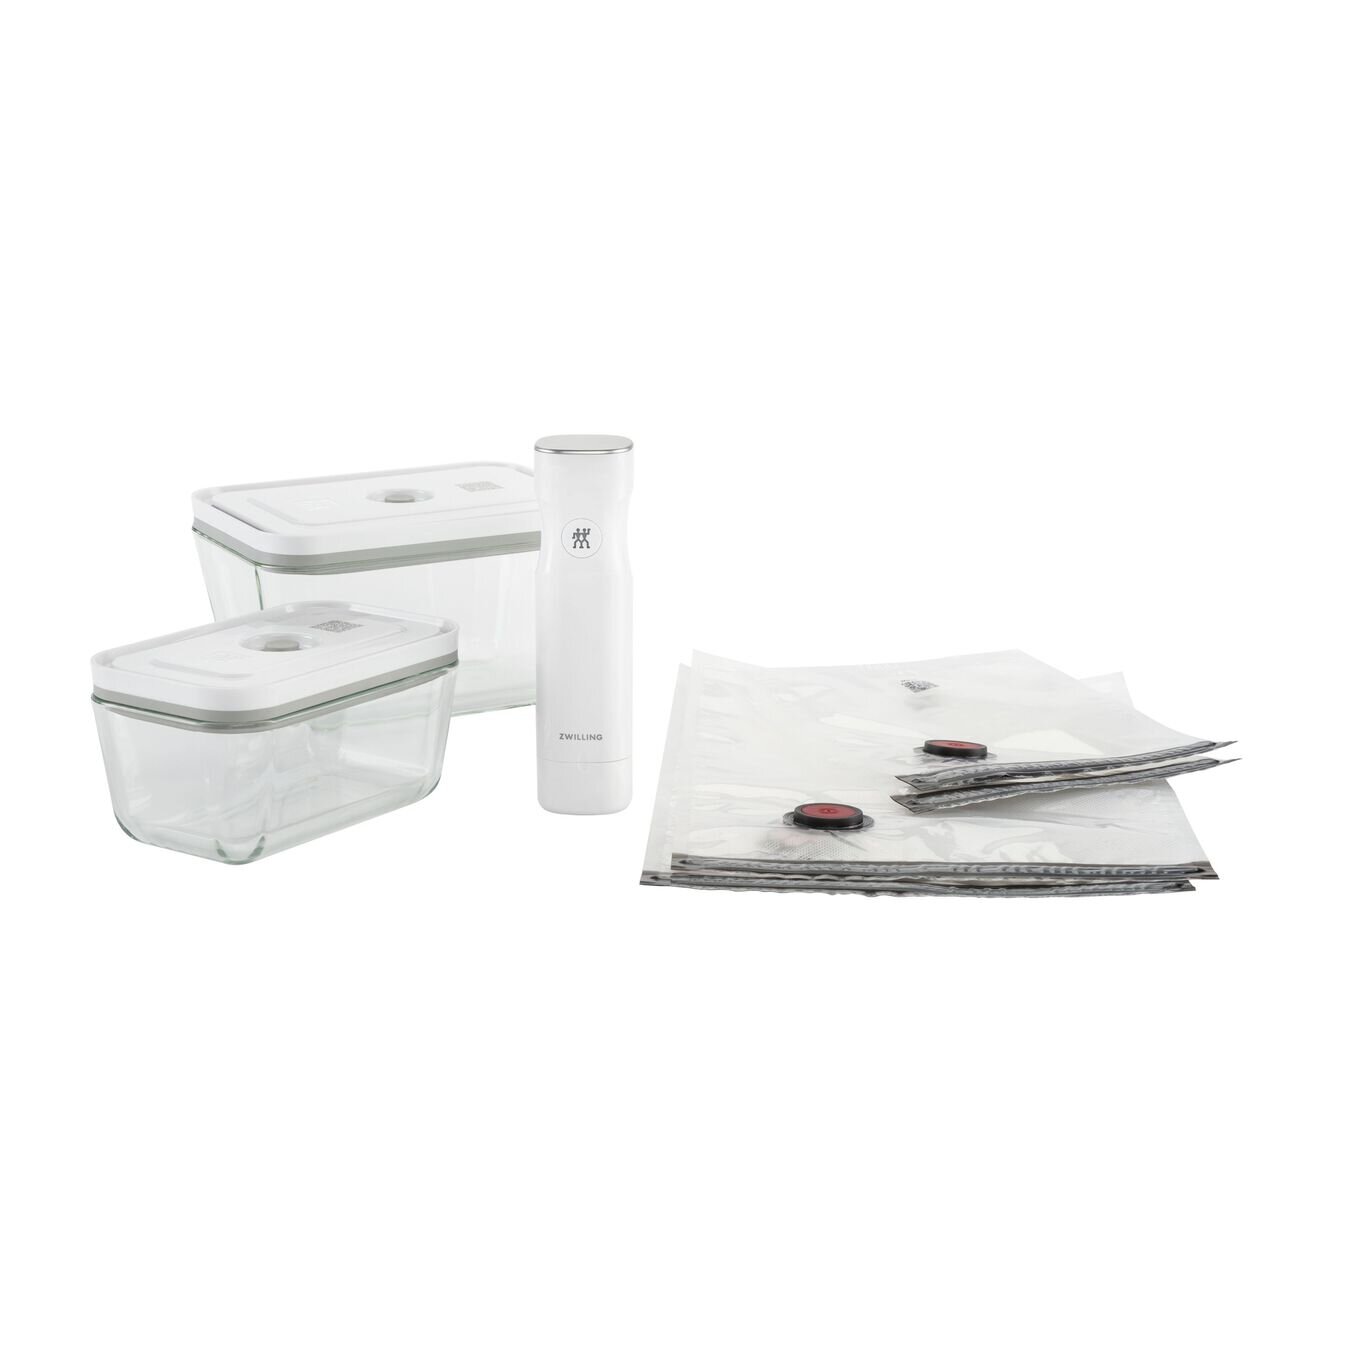 Food Storage Container Set-7 Piece - White